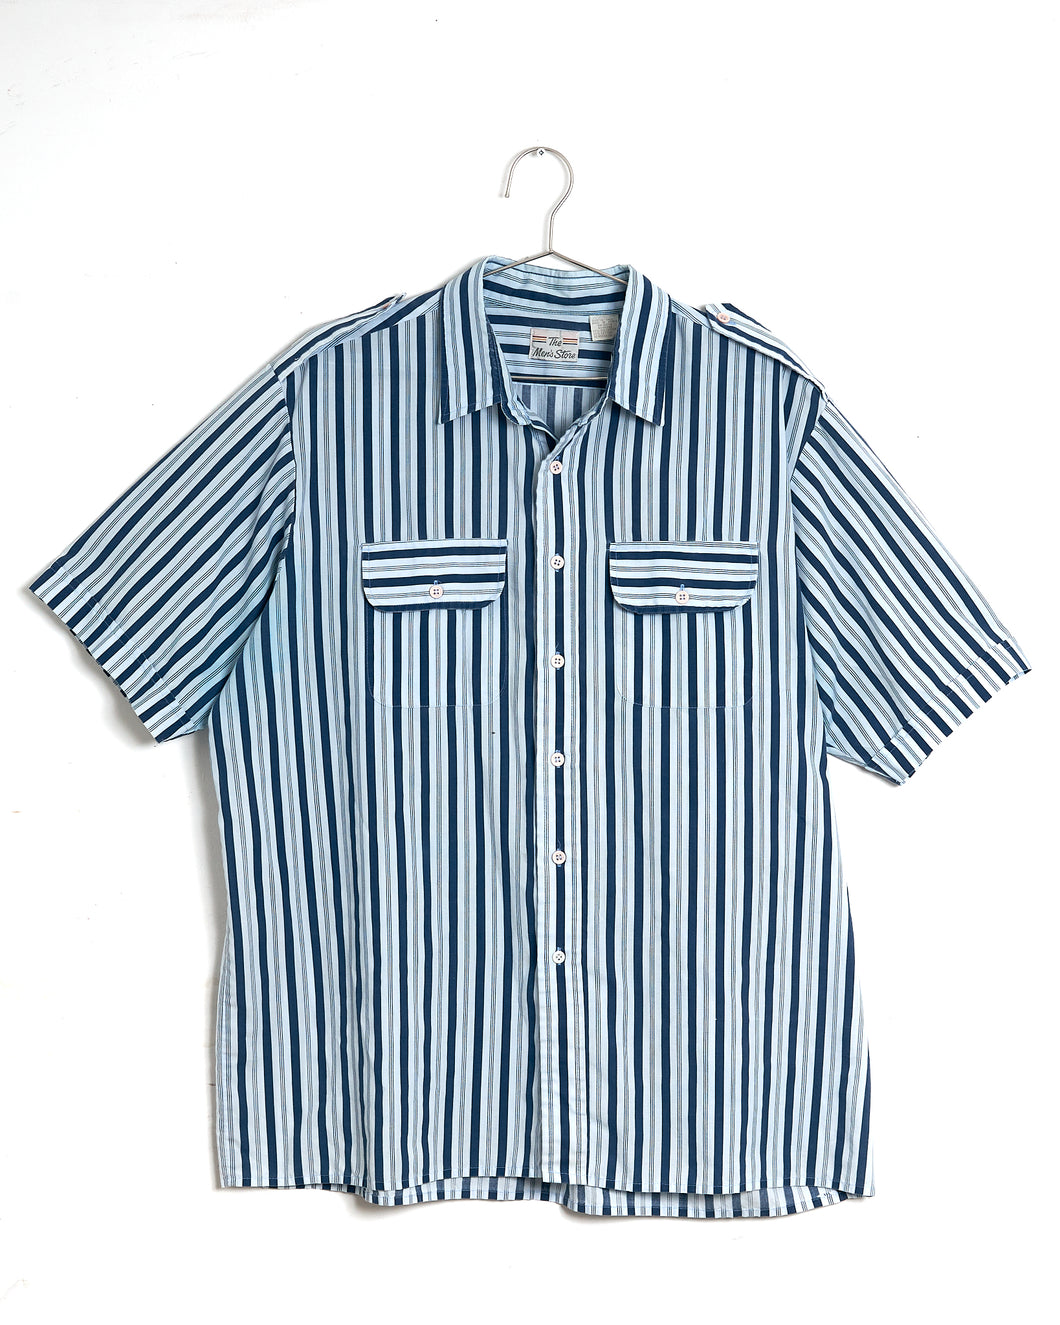 1980s/90s Sears Striped S/S Shirt